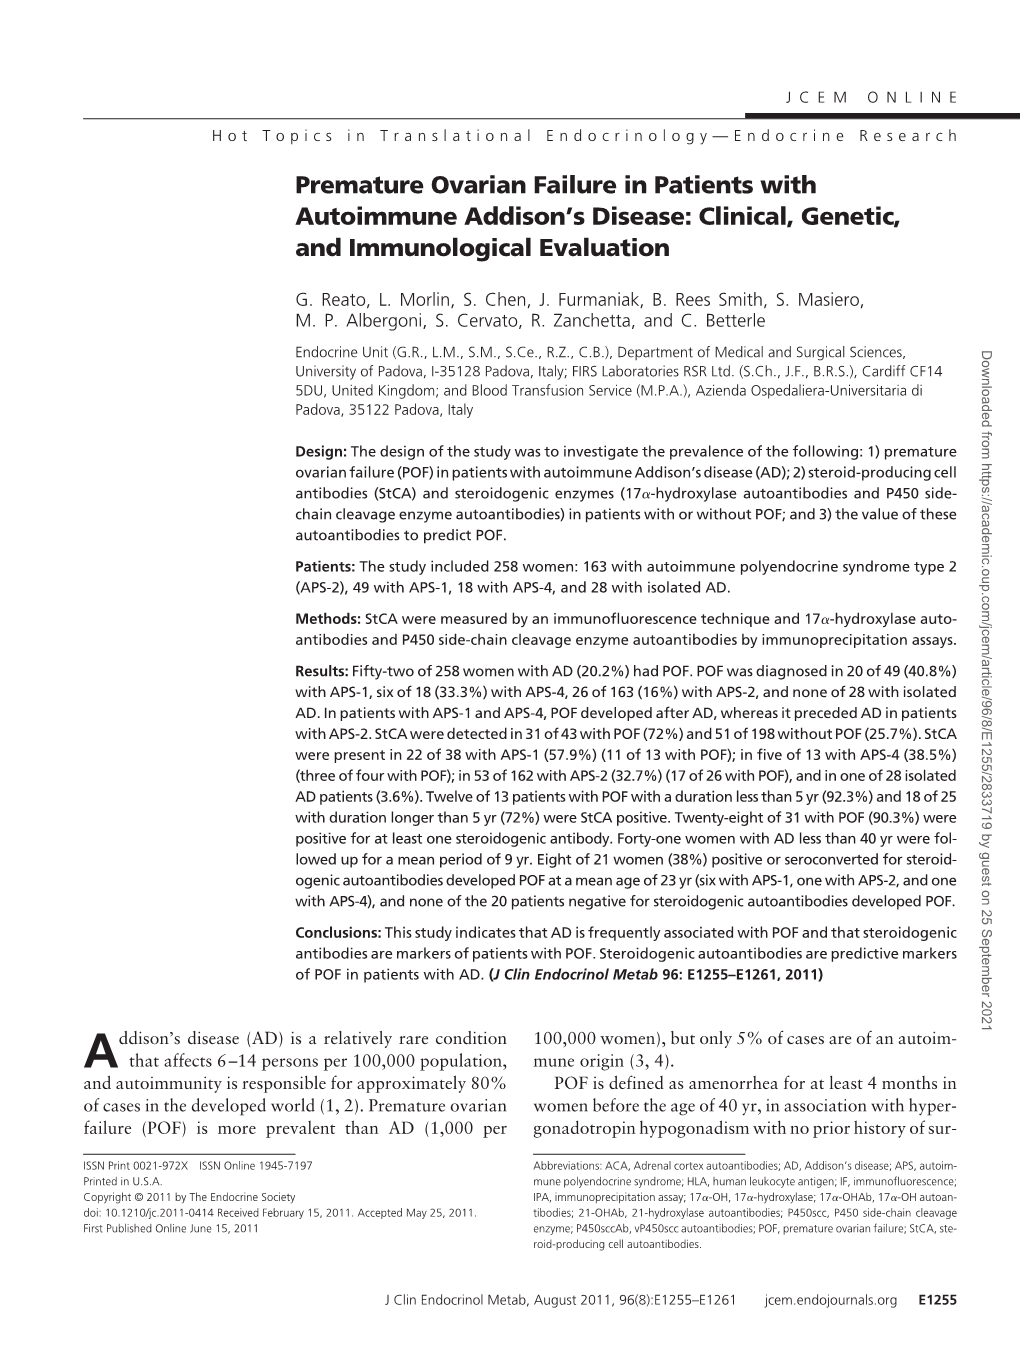 Premature Ovarian Failure in Patients with Autoimmune Addison's Disease